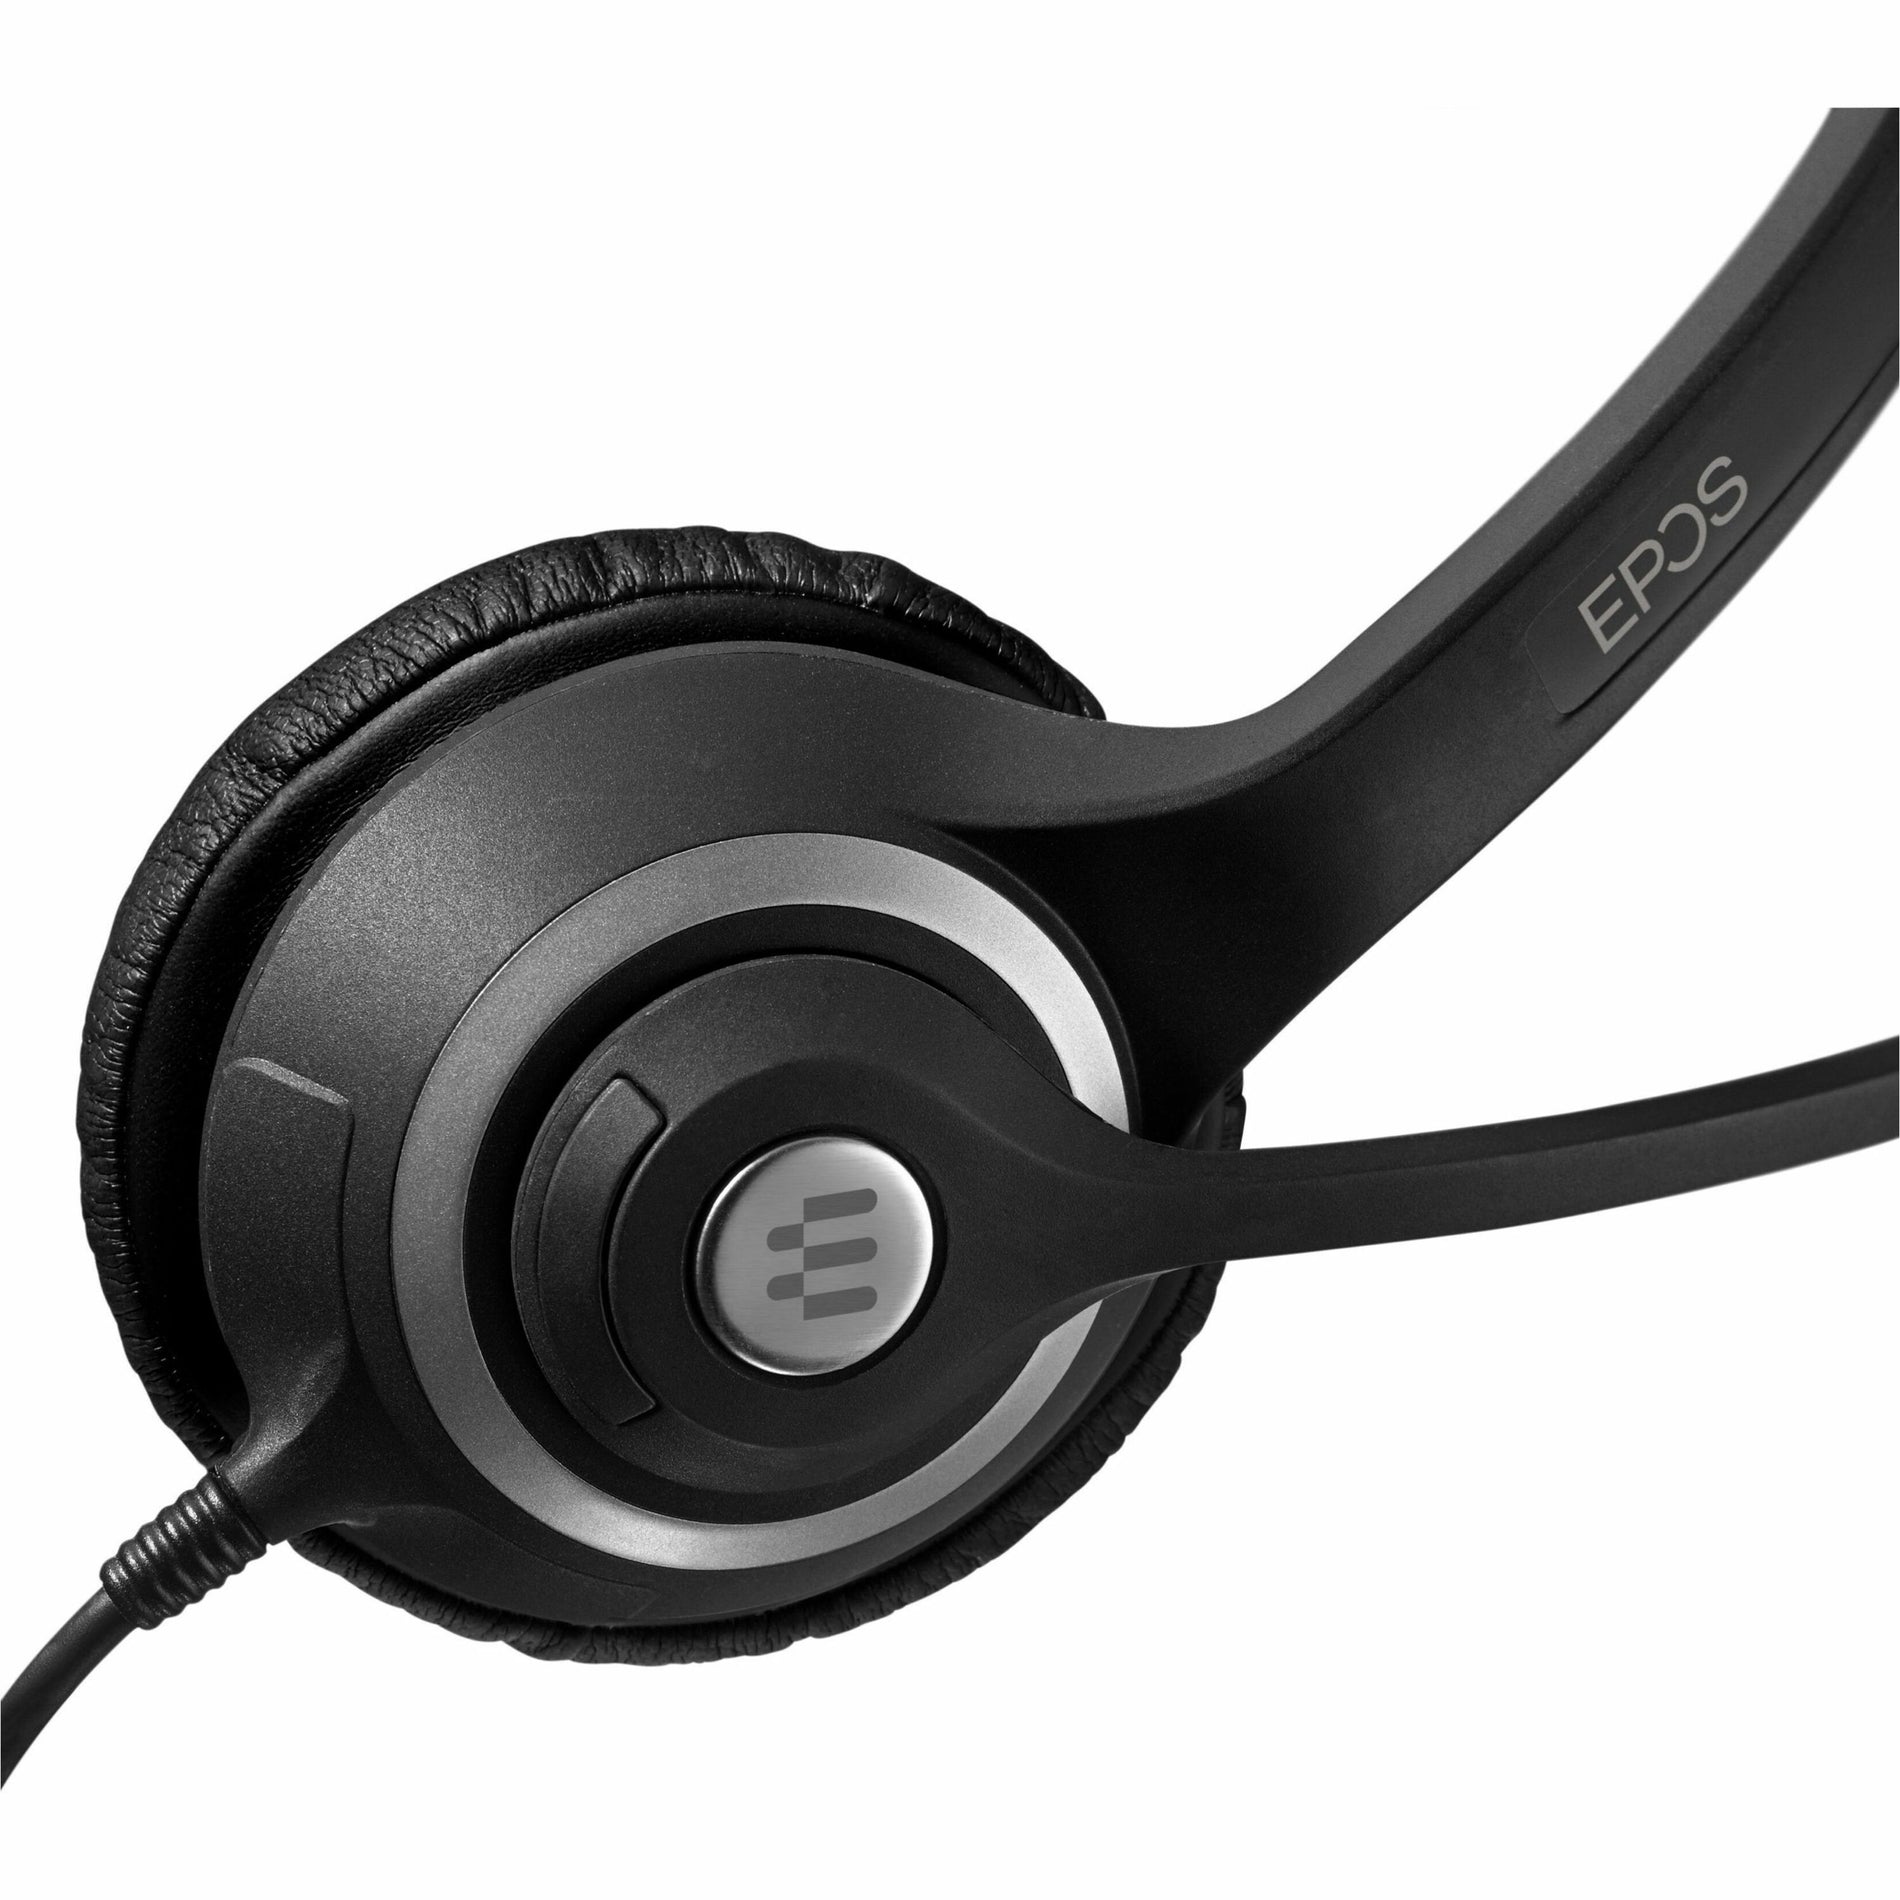 EPOS | SENNHEISER IMPACT SC 260 USB MS II Headset [Discontinued]